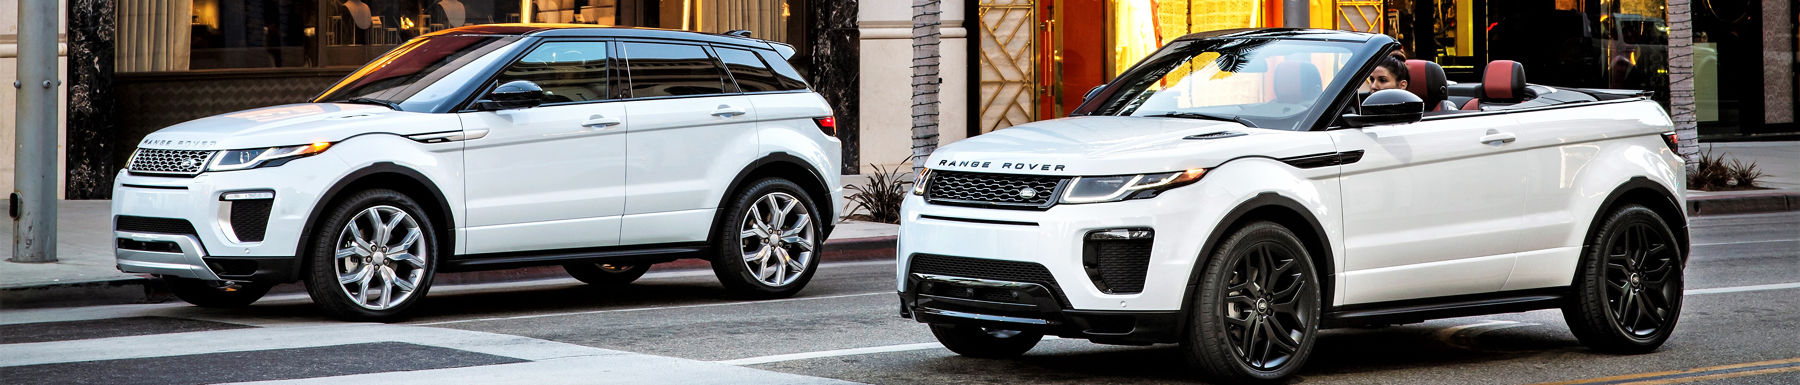 Range Rover Evoque Achieves Strategic Vision Total Quality Award